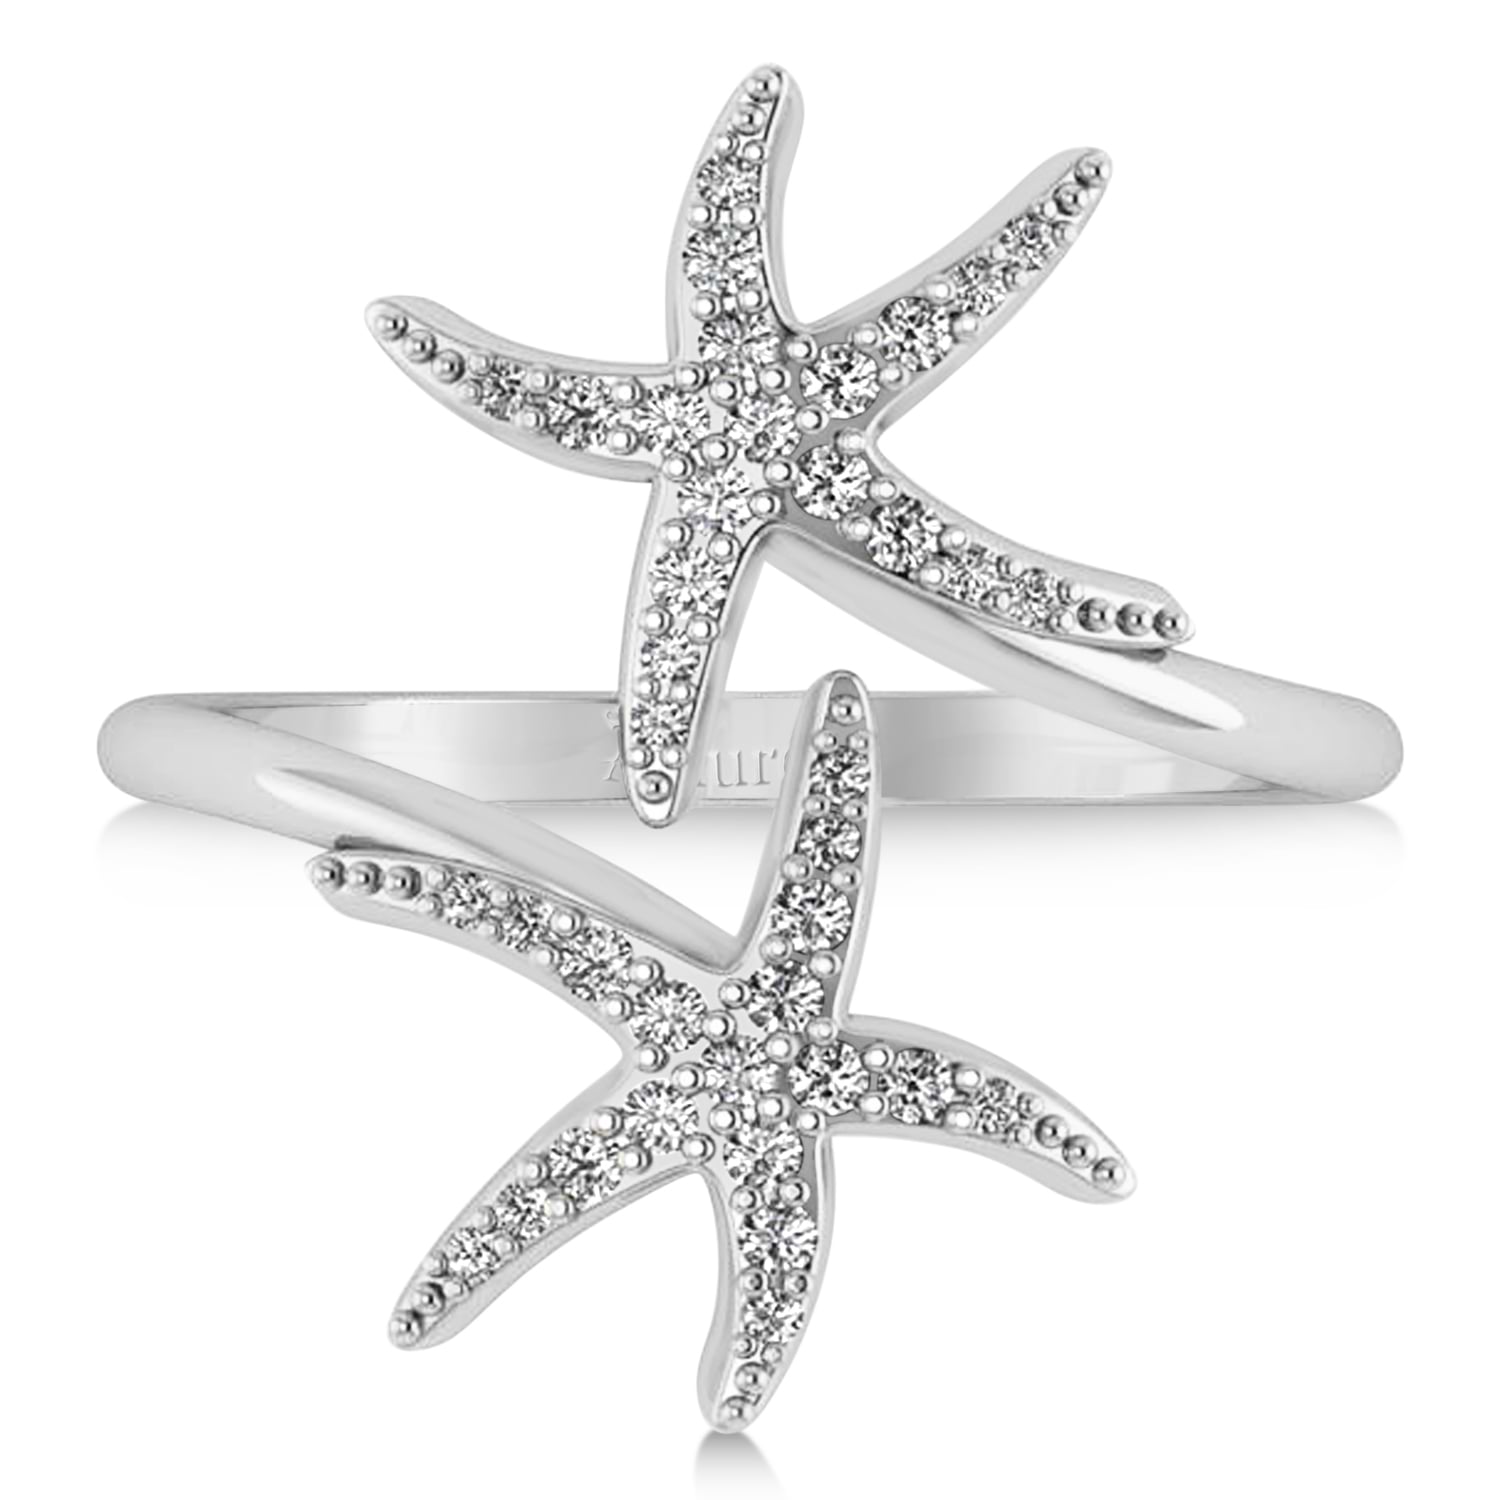 Diamond Double Starfish Fashion Ring 14k White Gold (0.30ct)